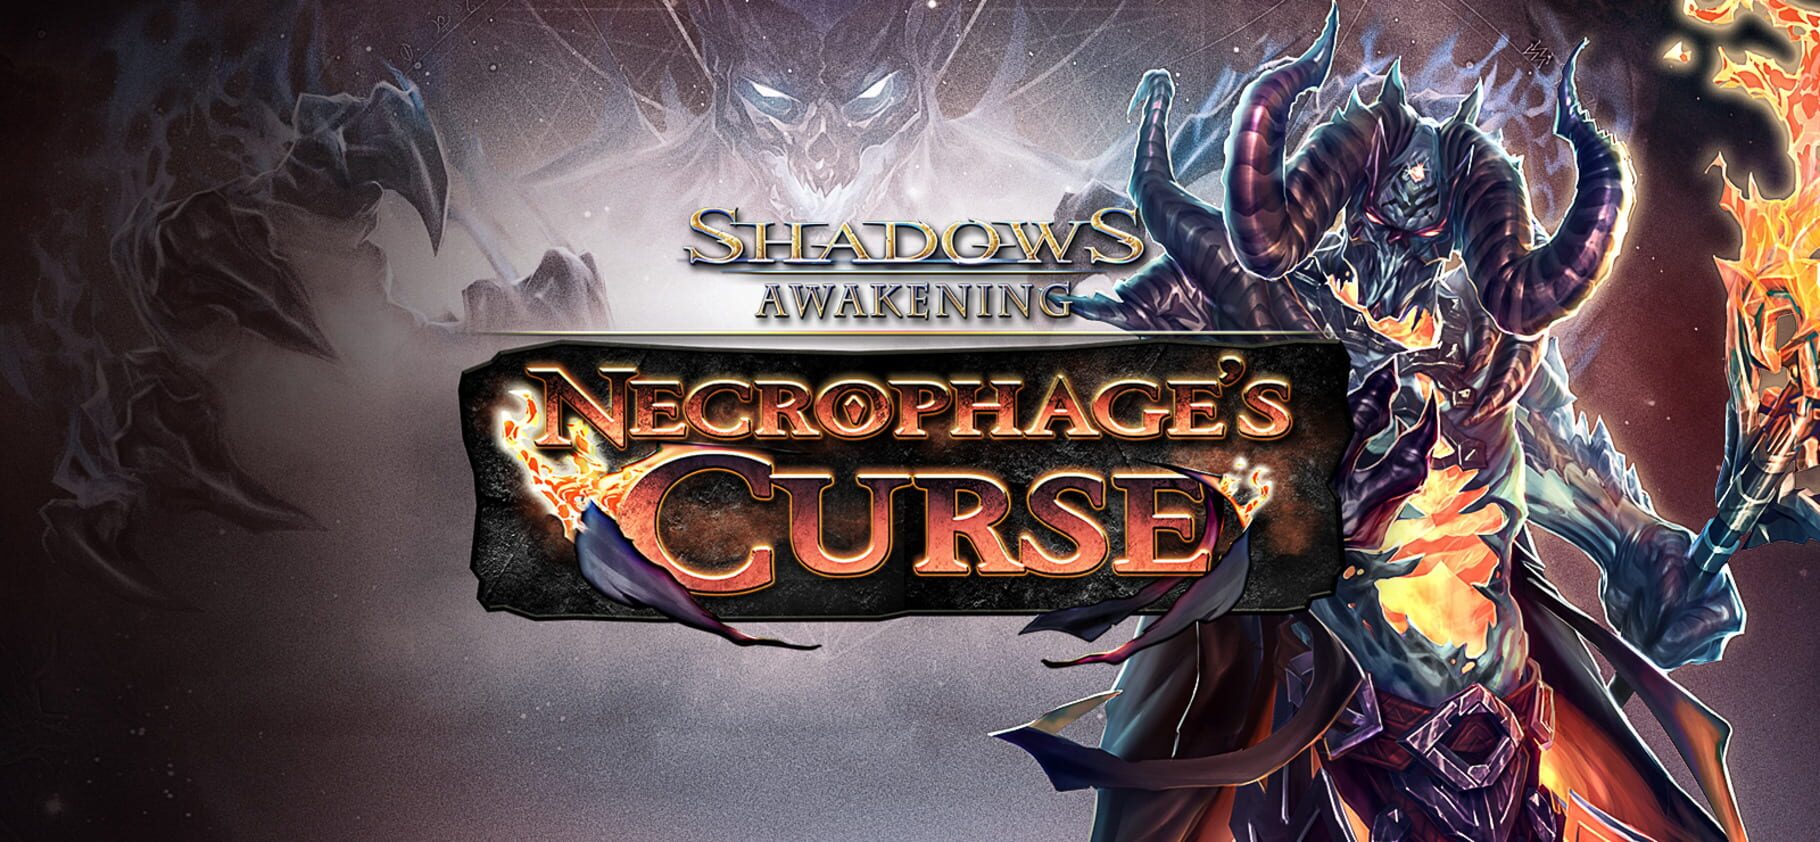 Shadows: Awakening - Necrophage's Curse Image